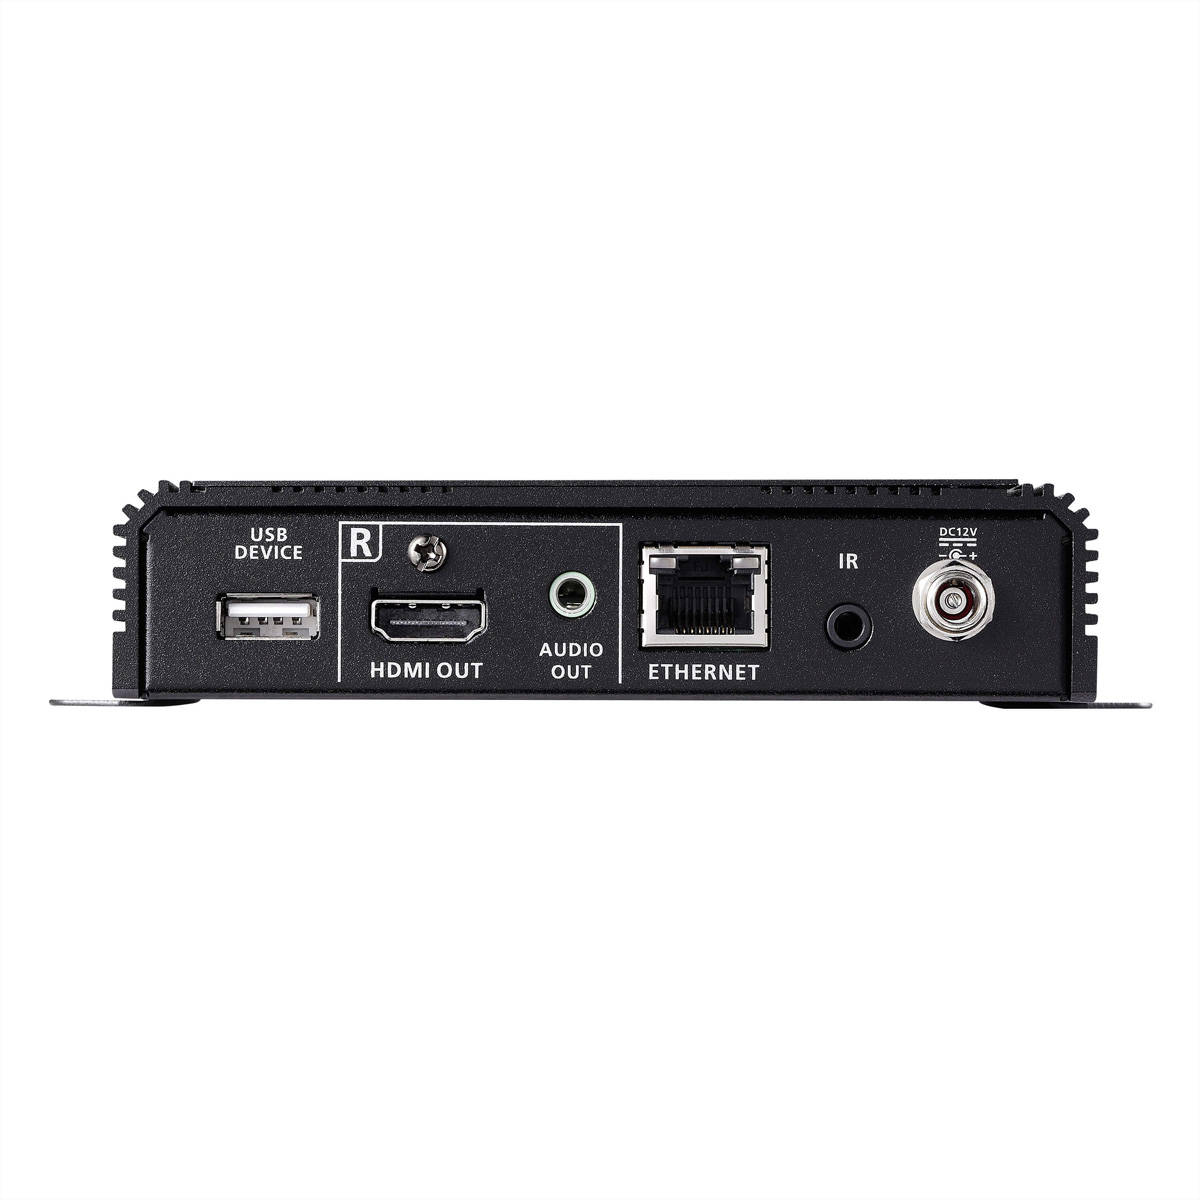 ATEN VE1843 True 4K Verlängerung USB HDBaseT-Lite HDBaseT 3.0 HDMI Transceiver HDMI